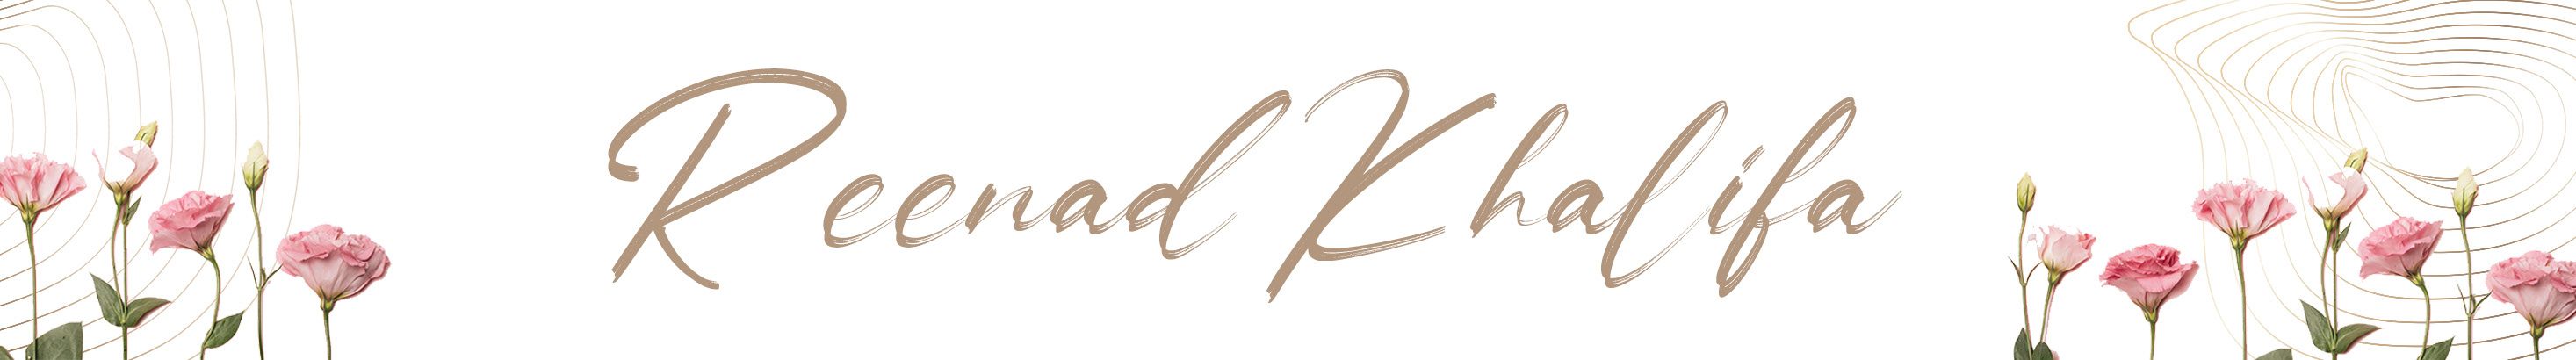 Reenad Khalifa's profile banner